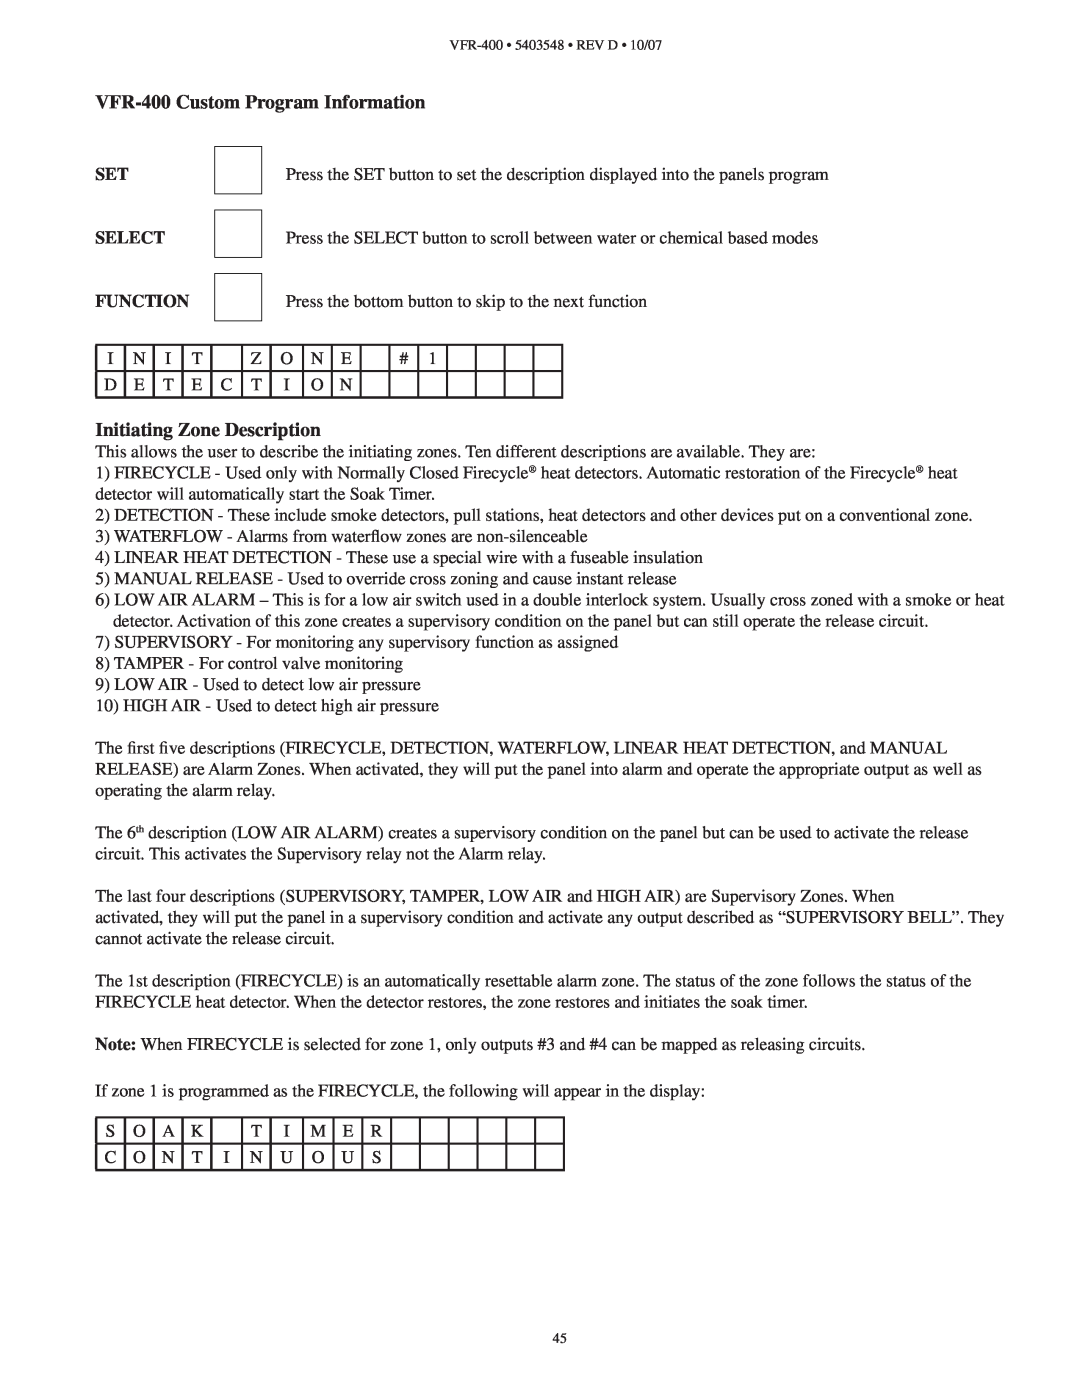 Viking instruction manual VFR-400Custom Program Information, Initiating Zone Description, Set Select Function 